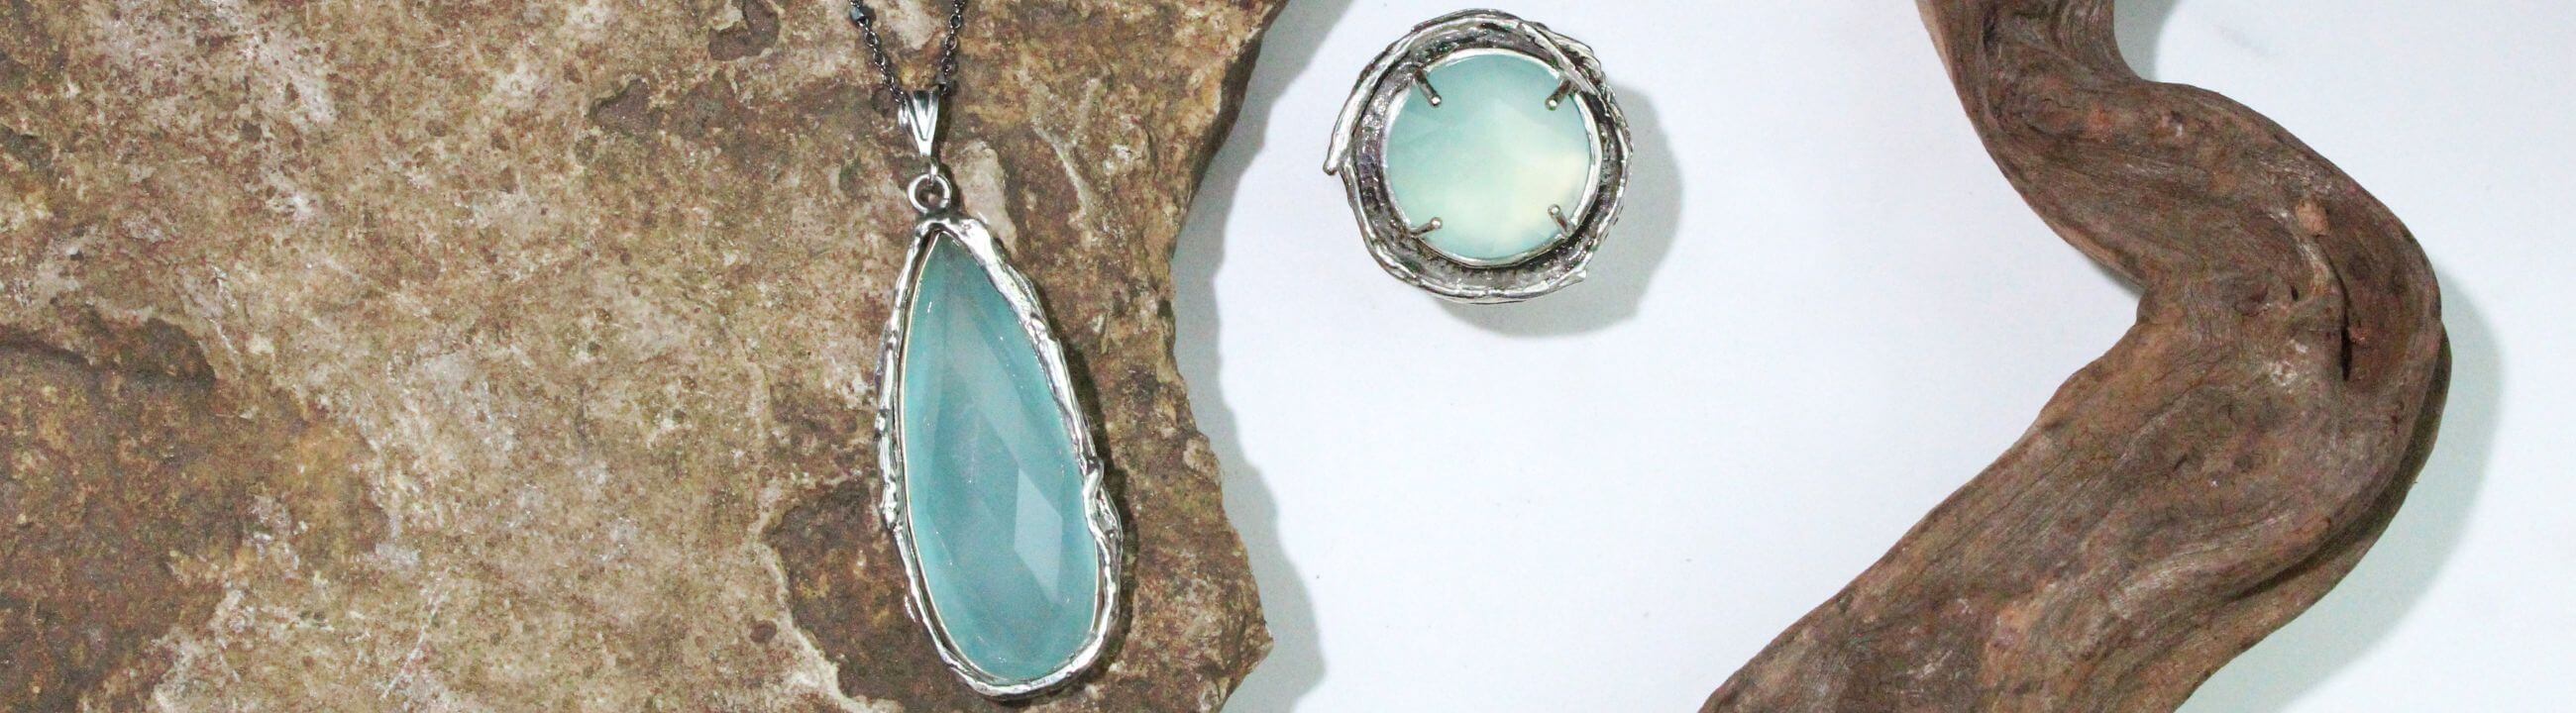 ocean sea water inspired jewelry designs